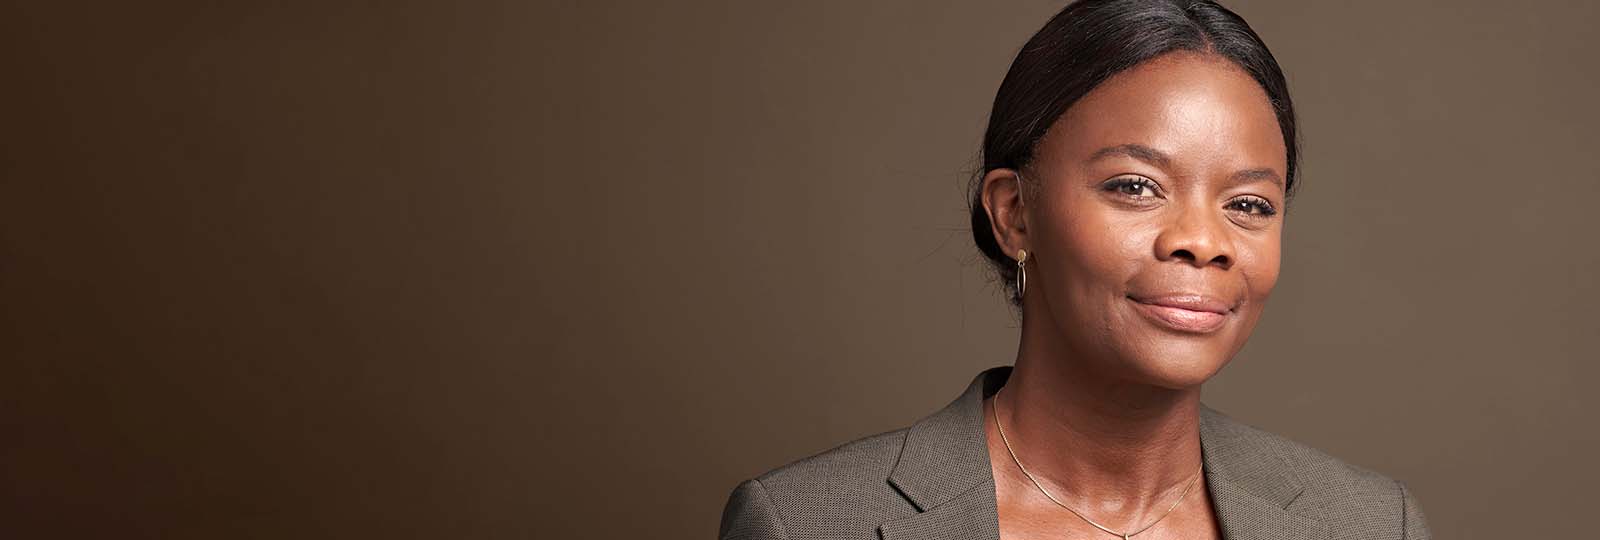 Woman smiling while wearing Rexton BiCore Rugged hearing aids